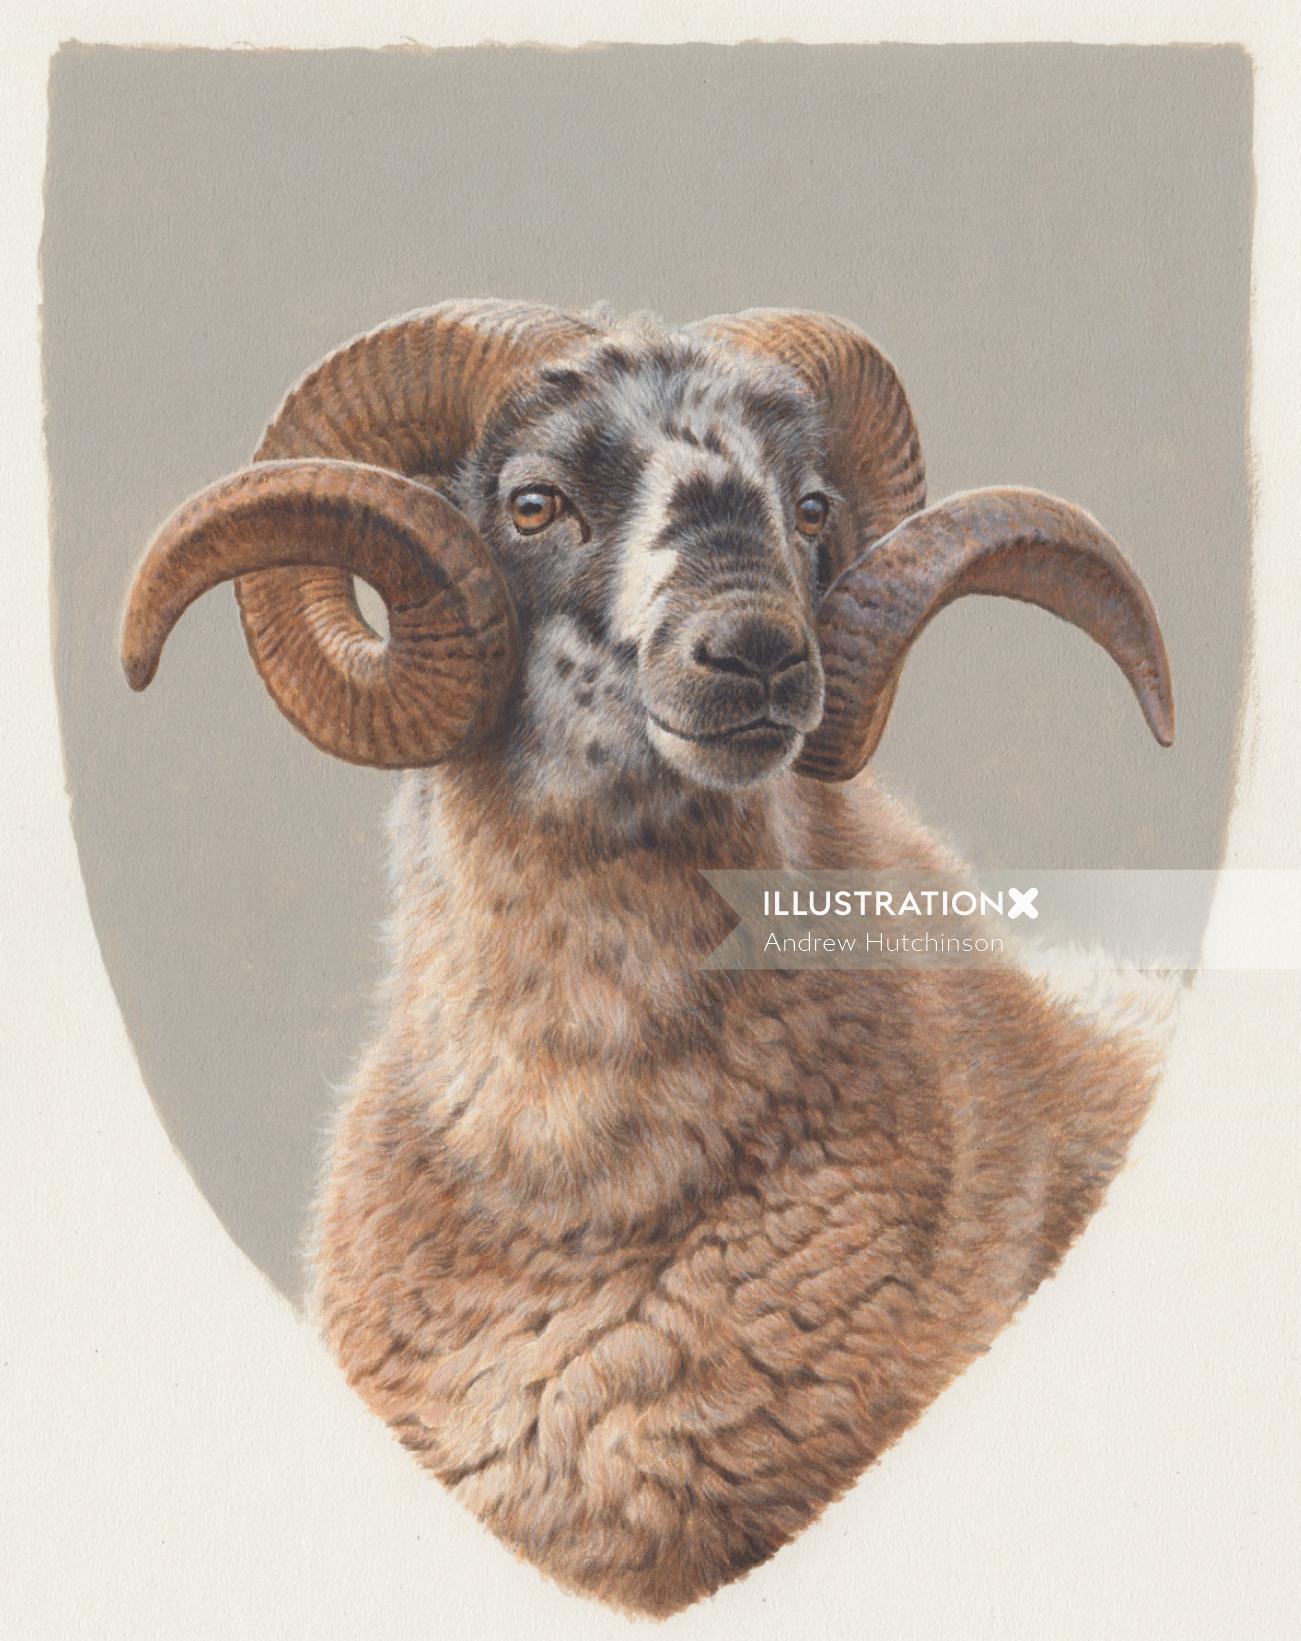 Black faced sheep portrait 